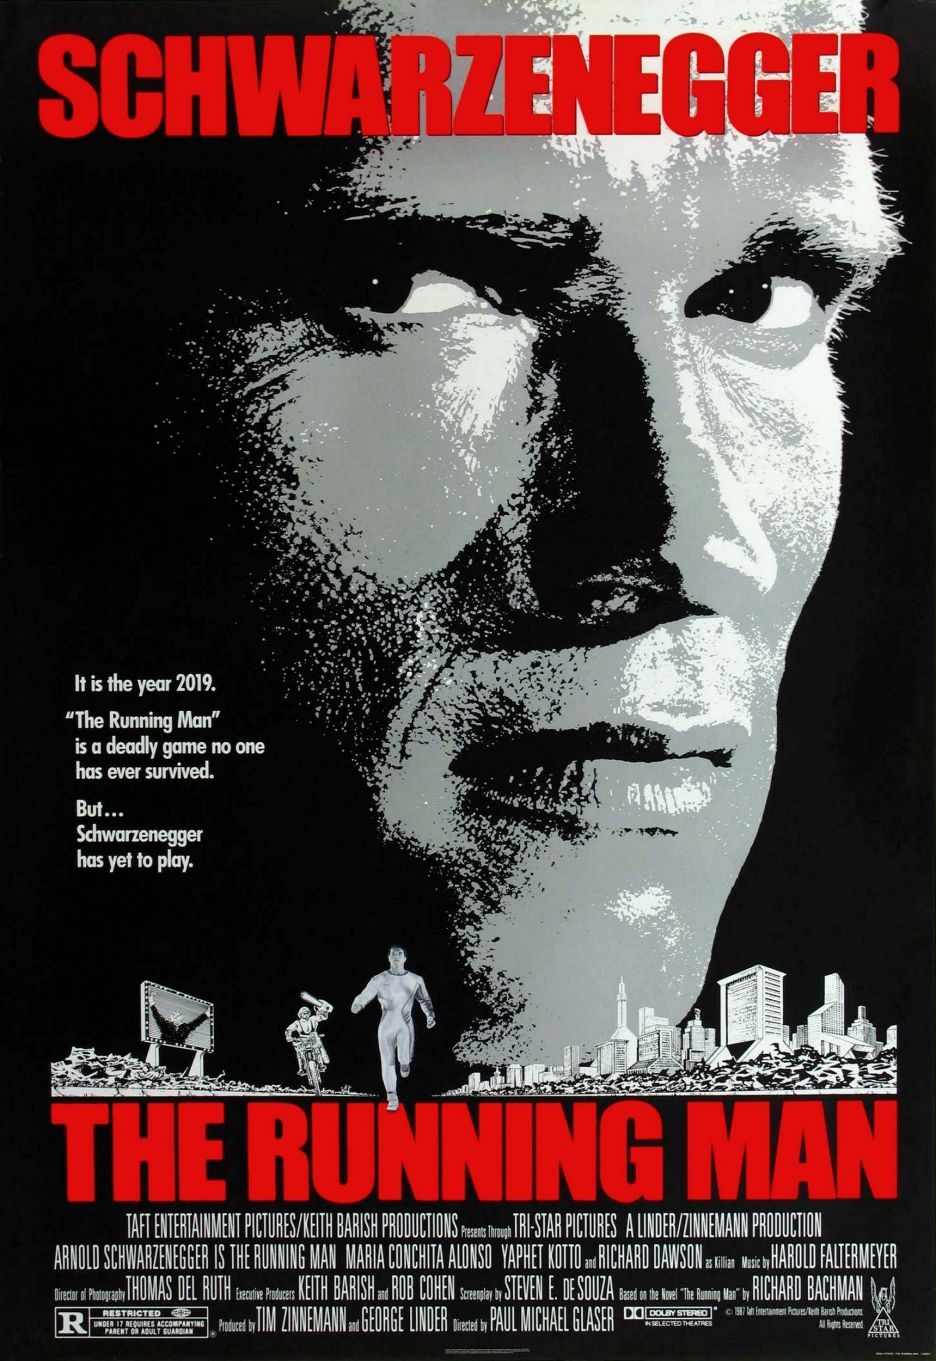 Arnold Schwarzenegger in The Running Man (1987)